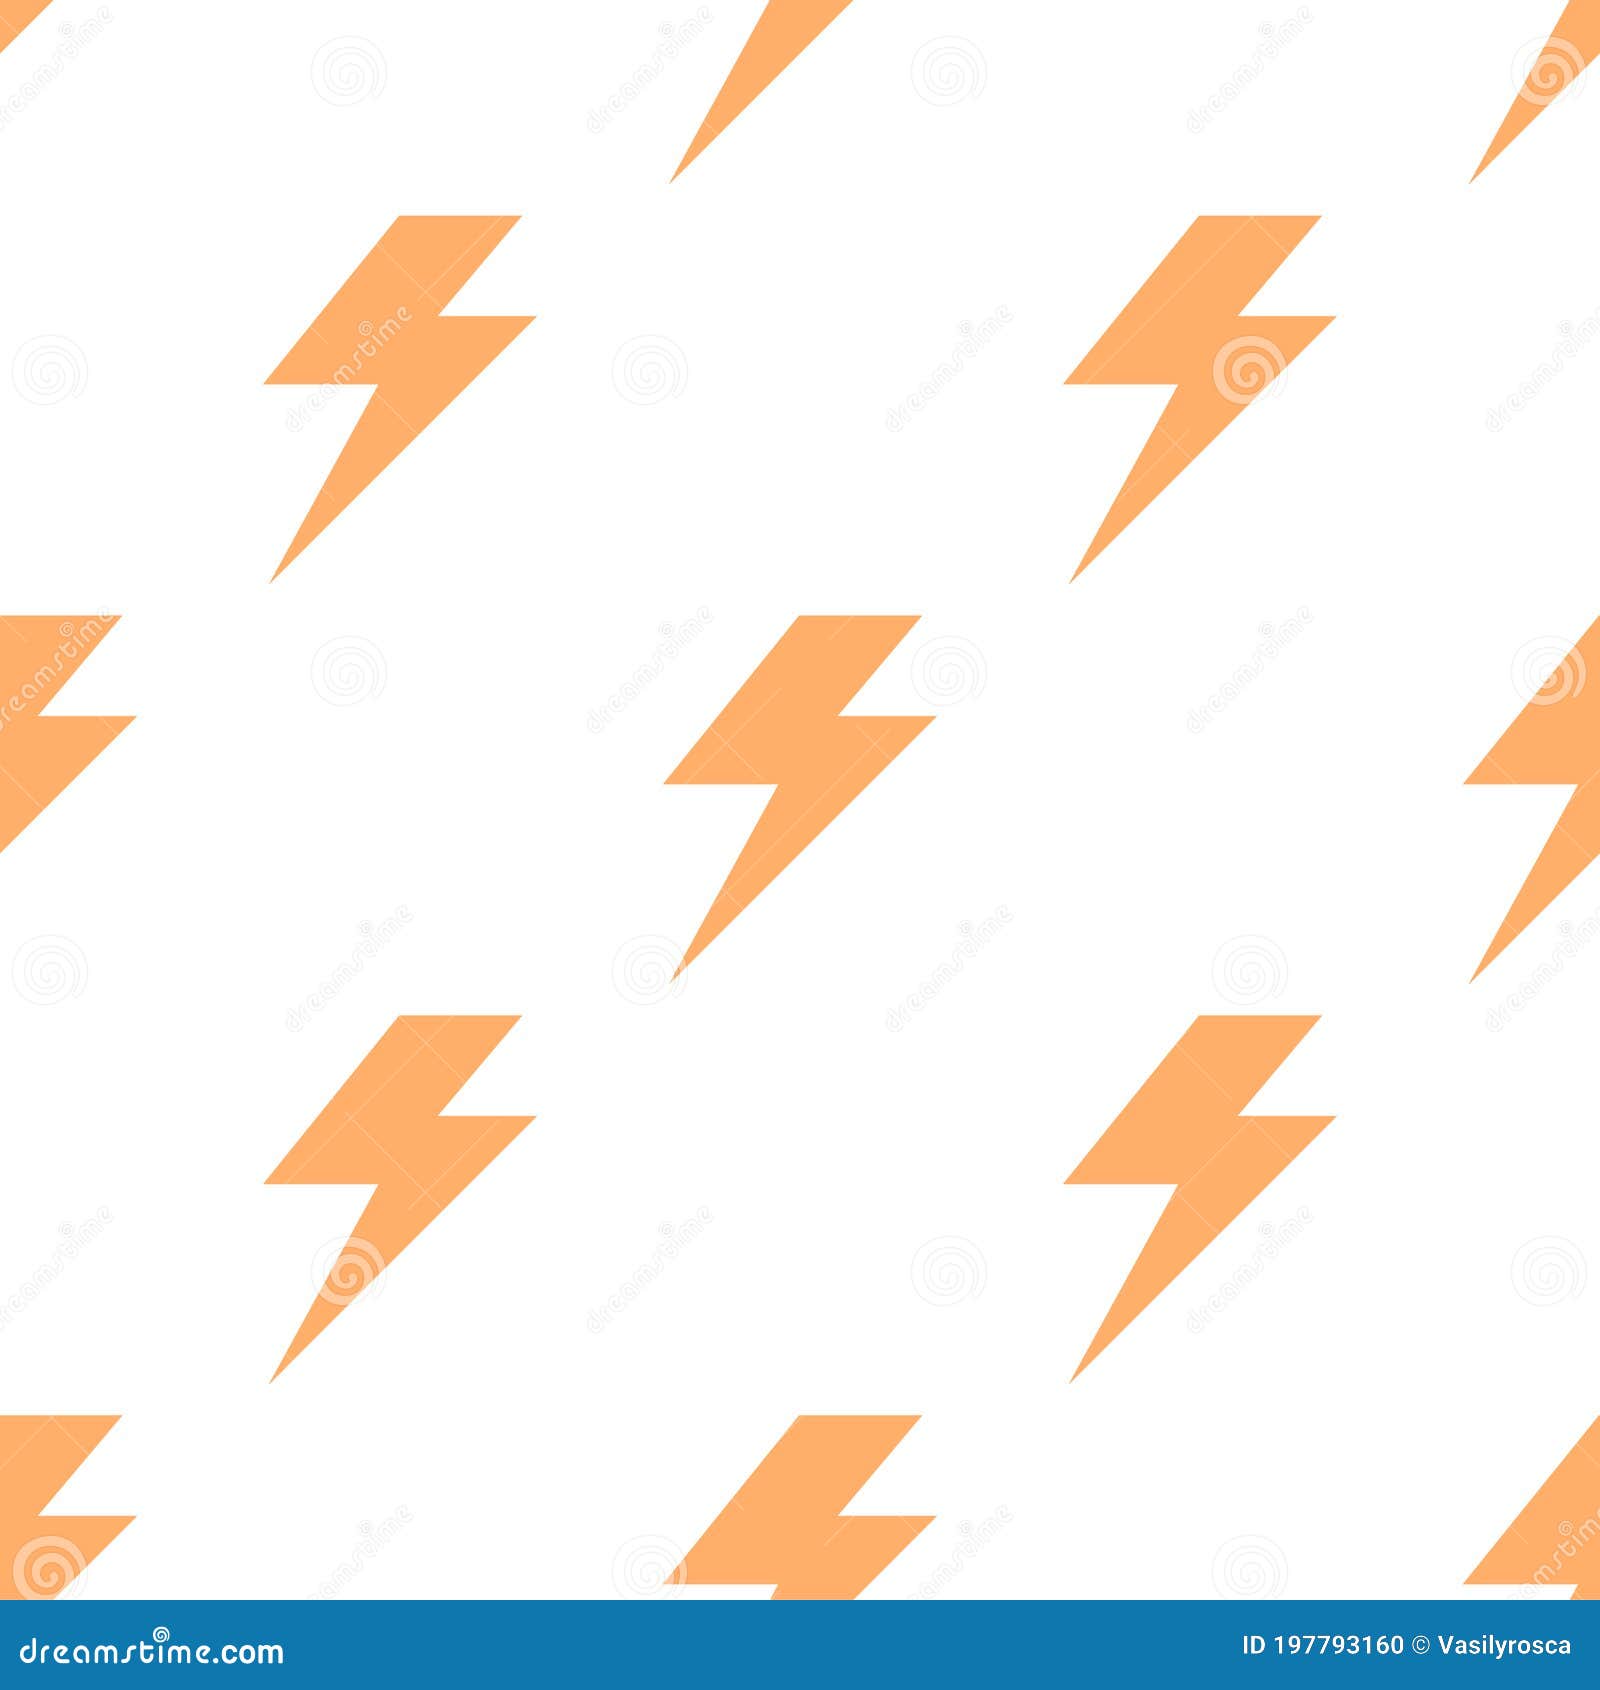 Lightning Bolt Seamless Pattern. Thunderbolt Print Background Stock - Illustration of comic: 197793160